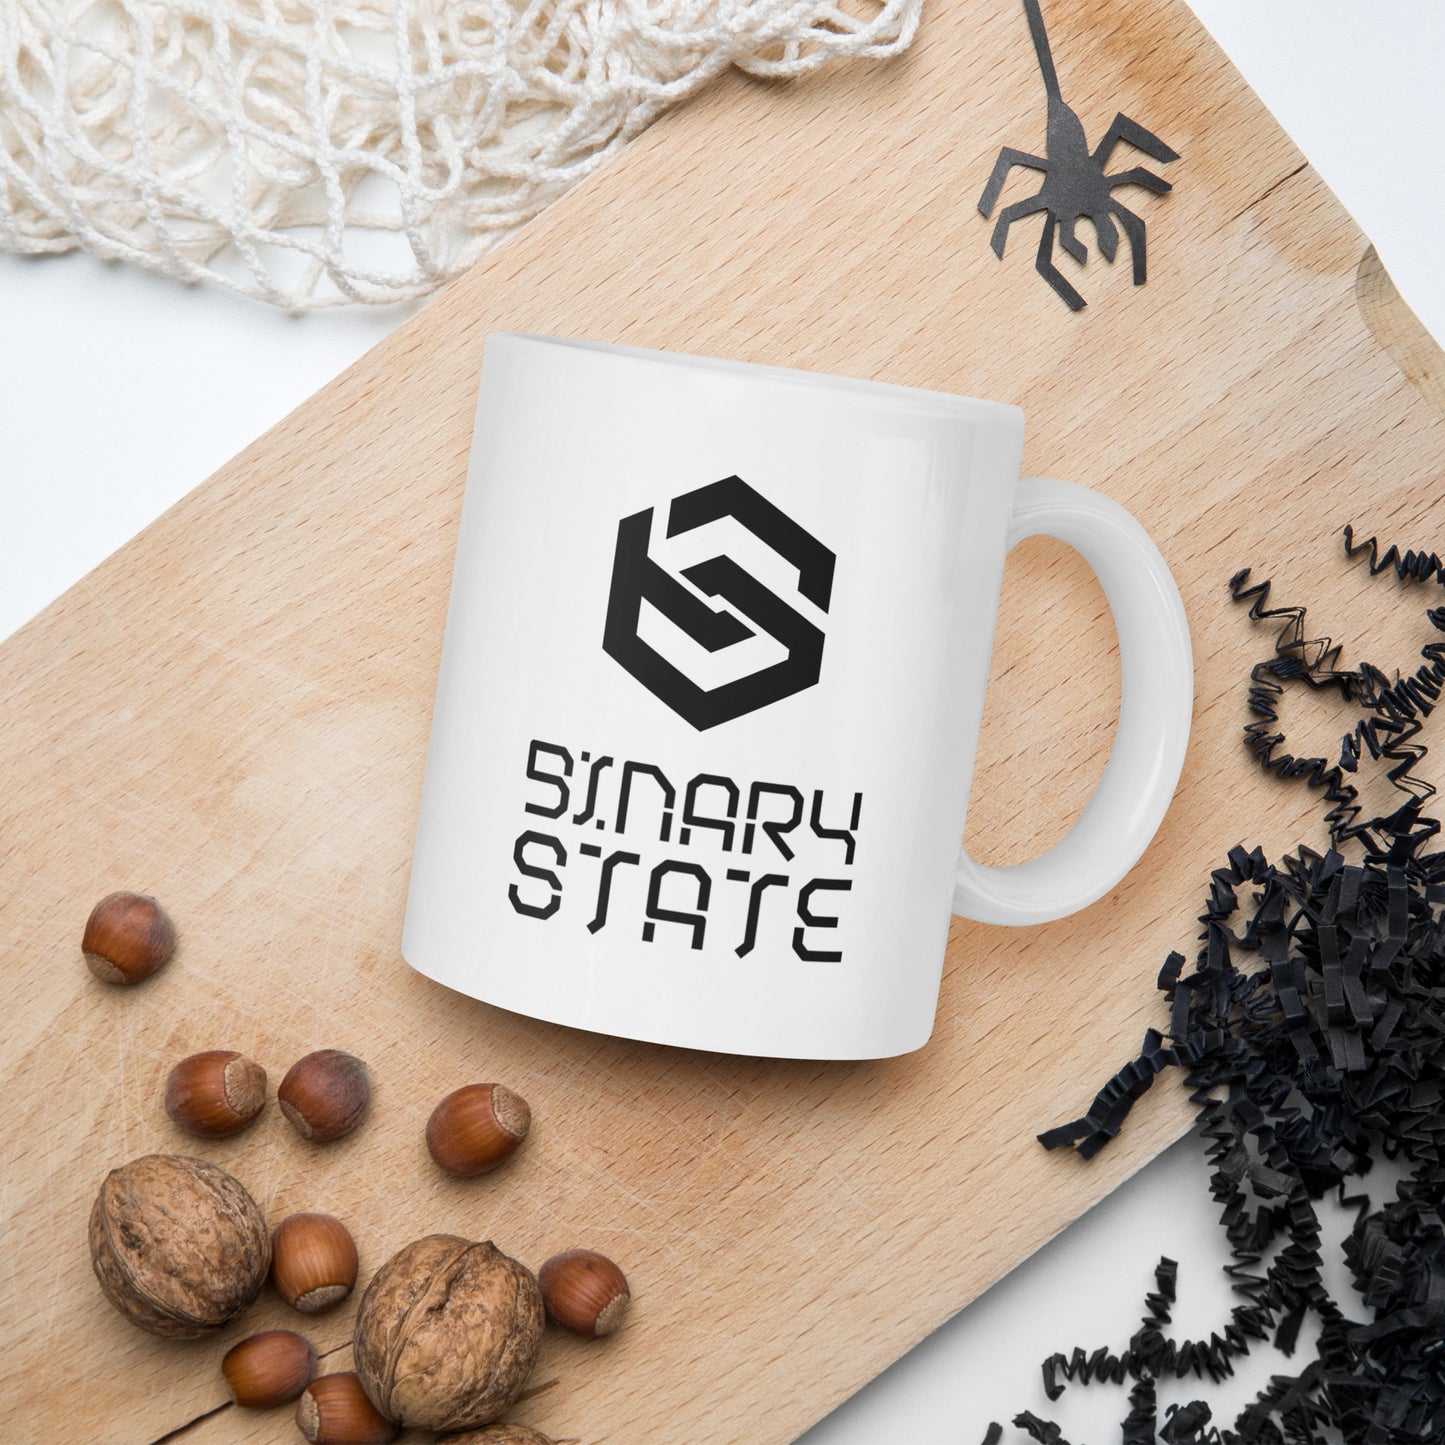 Binary State (v1) White glossy mug